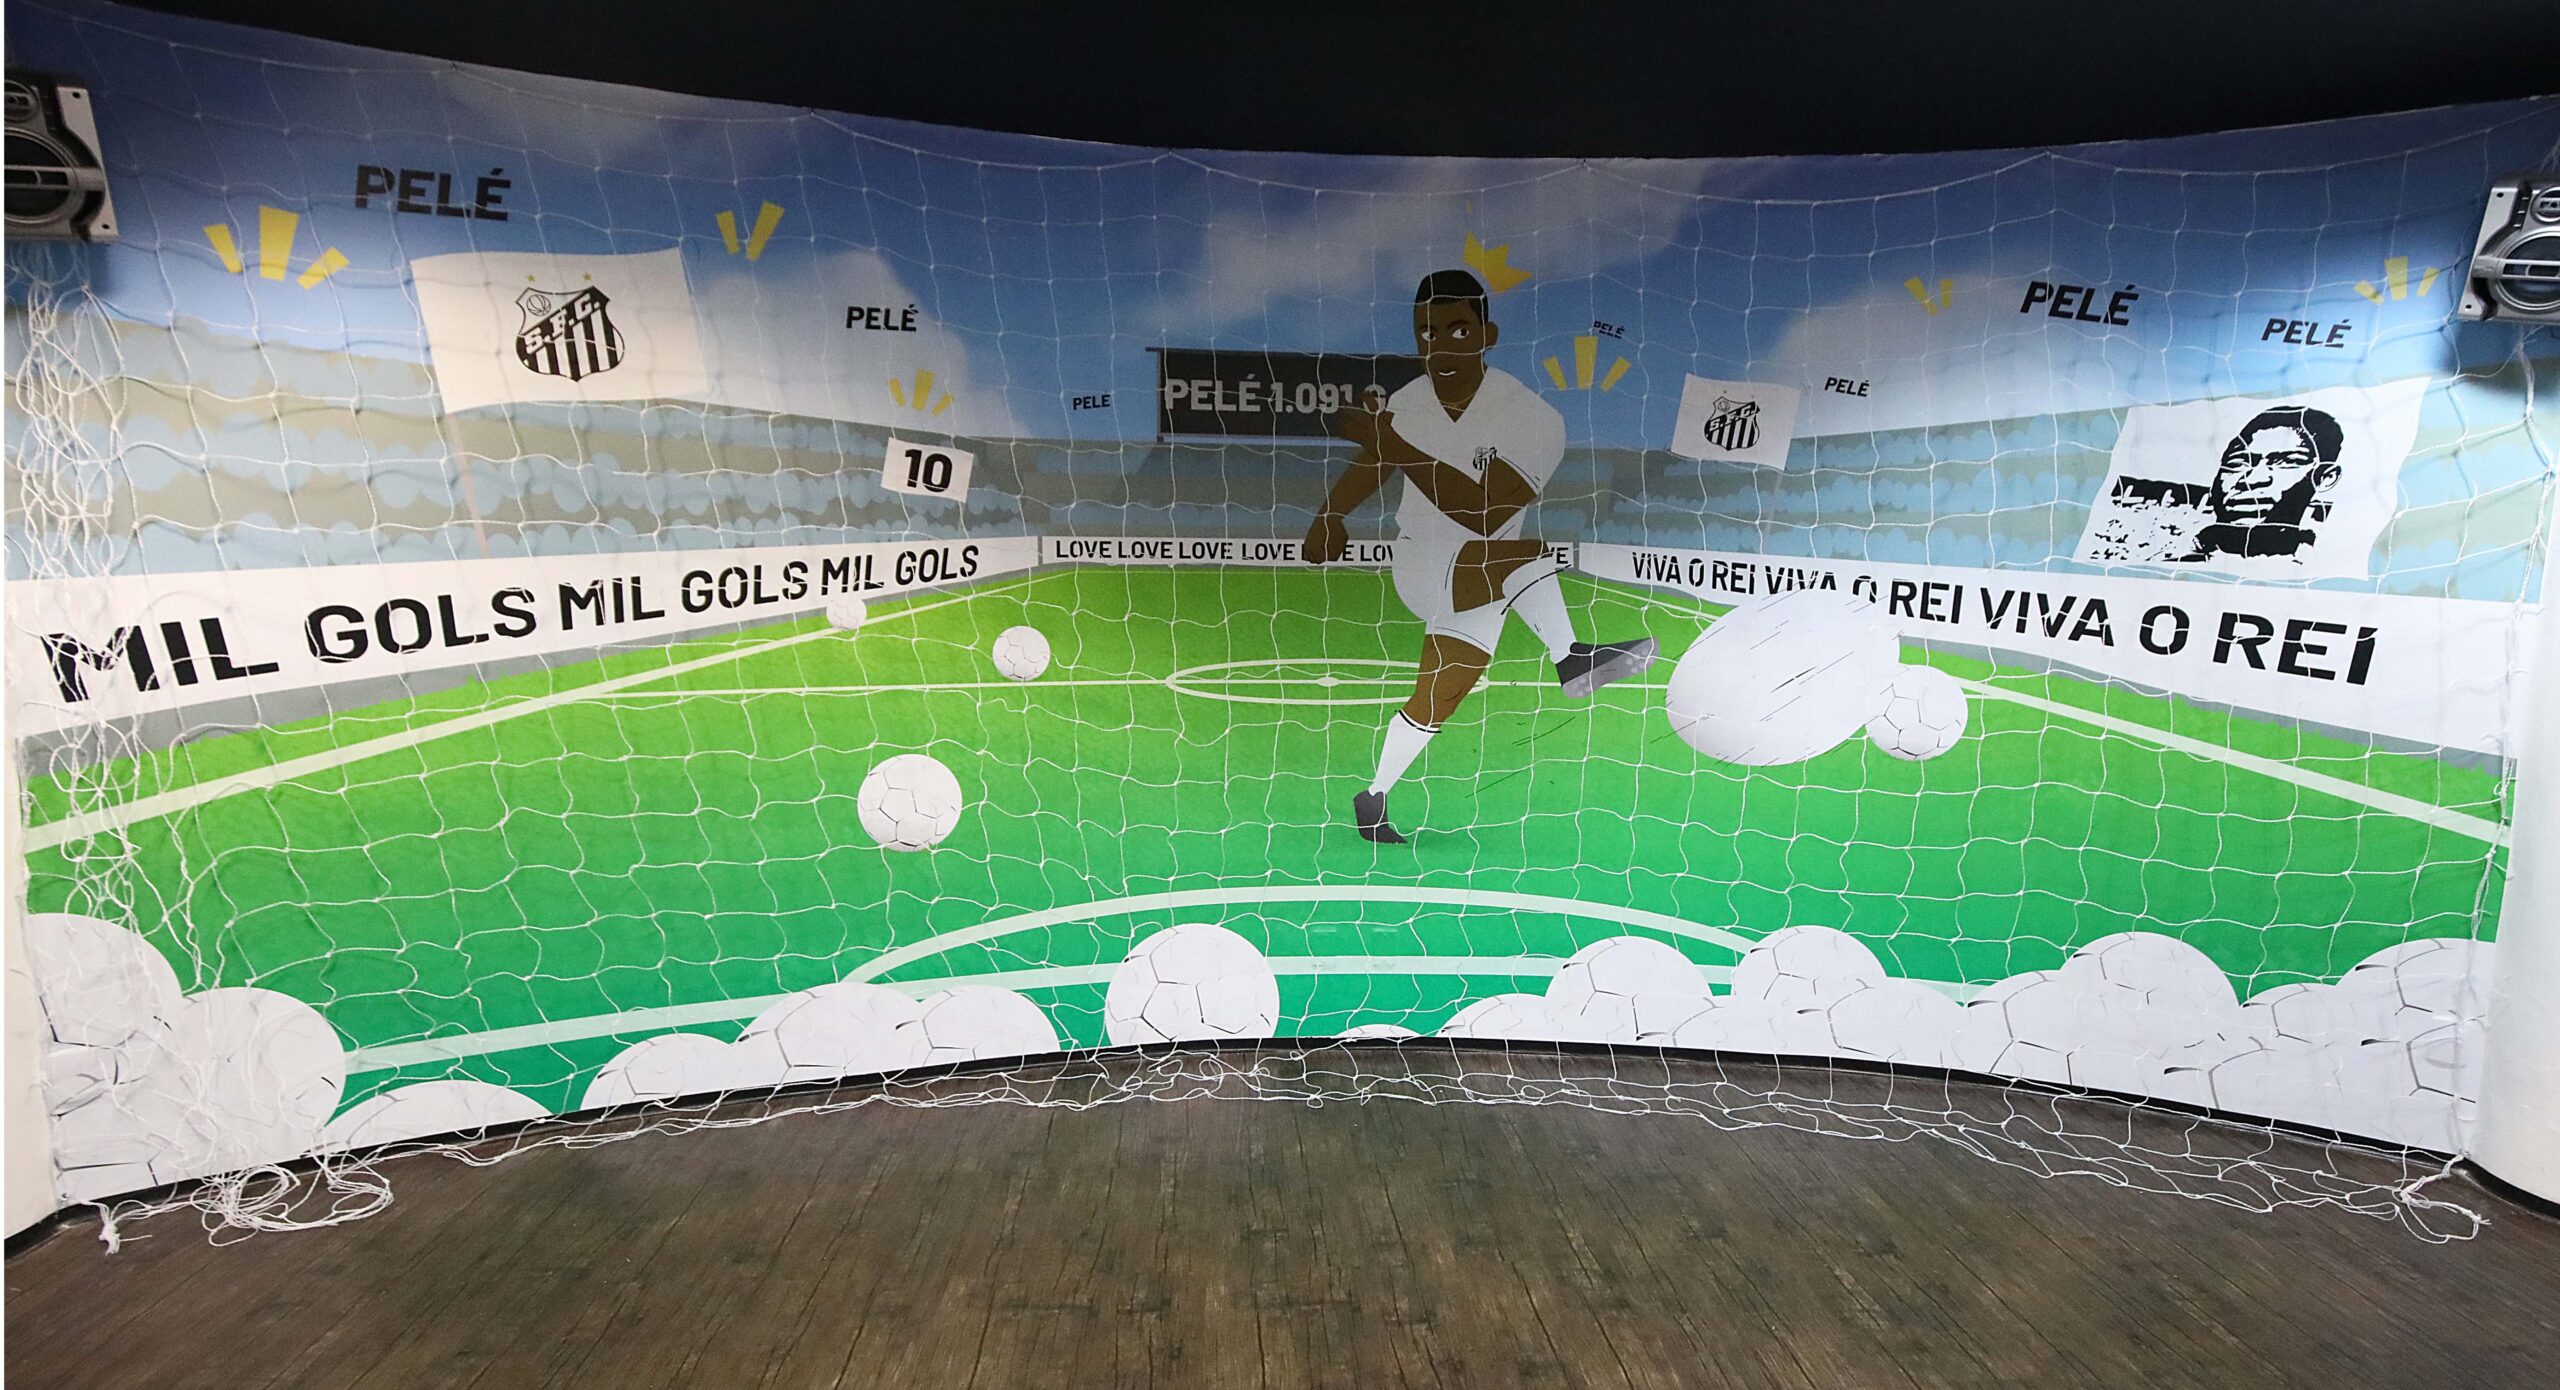 Tras negativa repercusión, Santos dejó de revelar homenaje al Rey Pelé